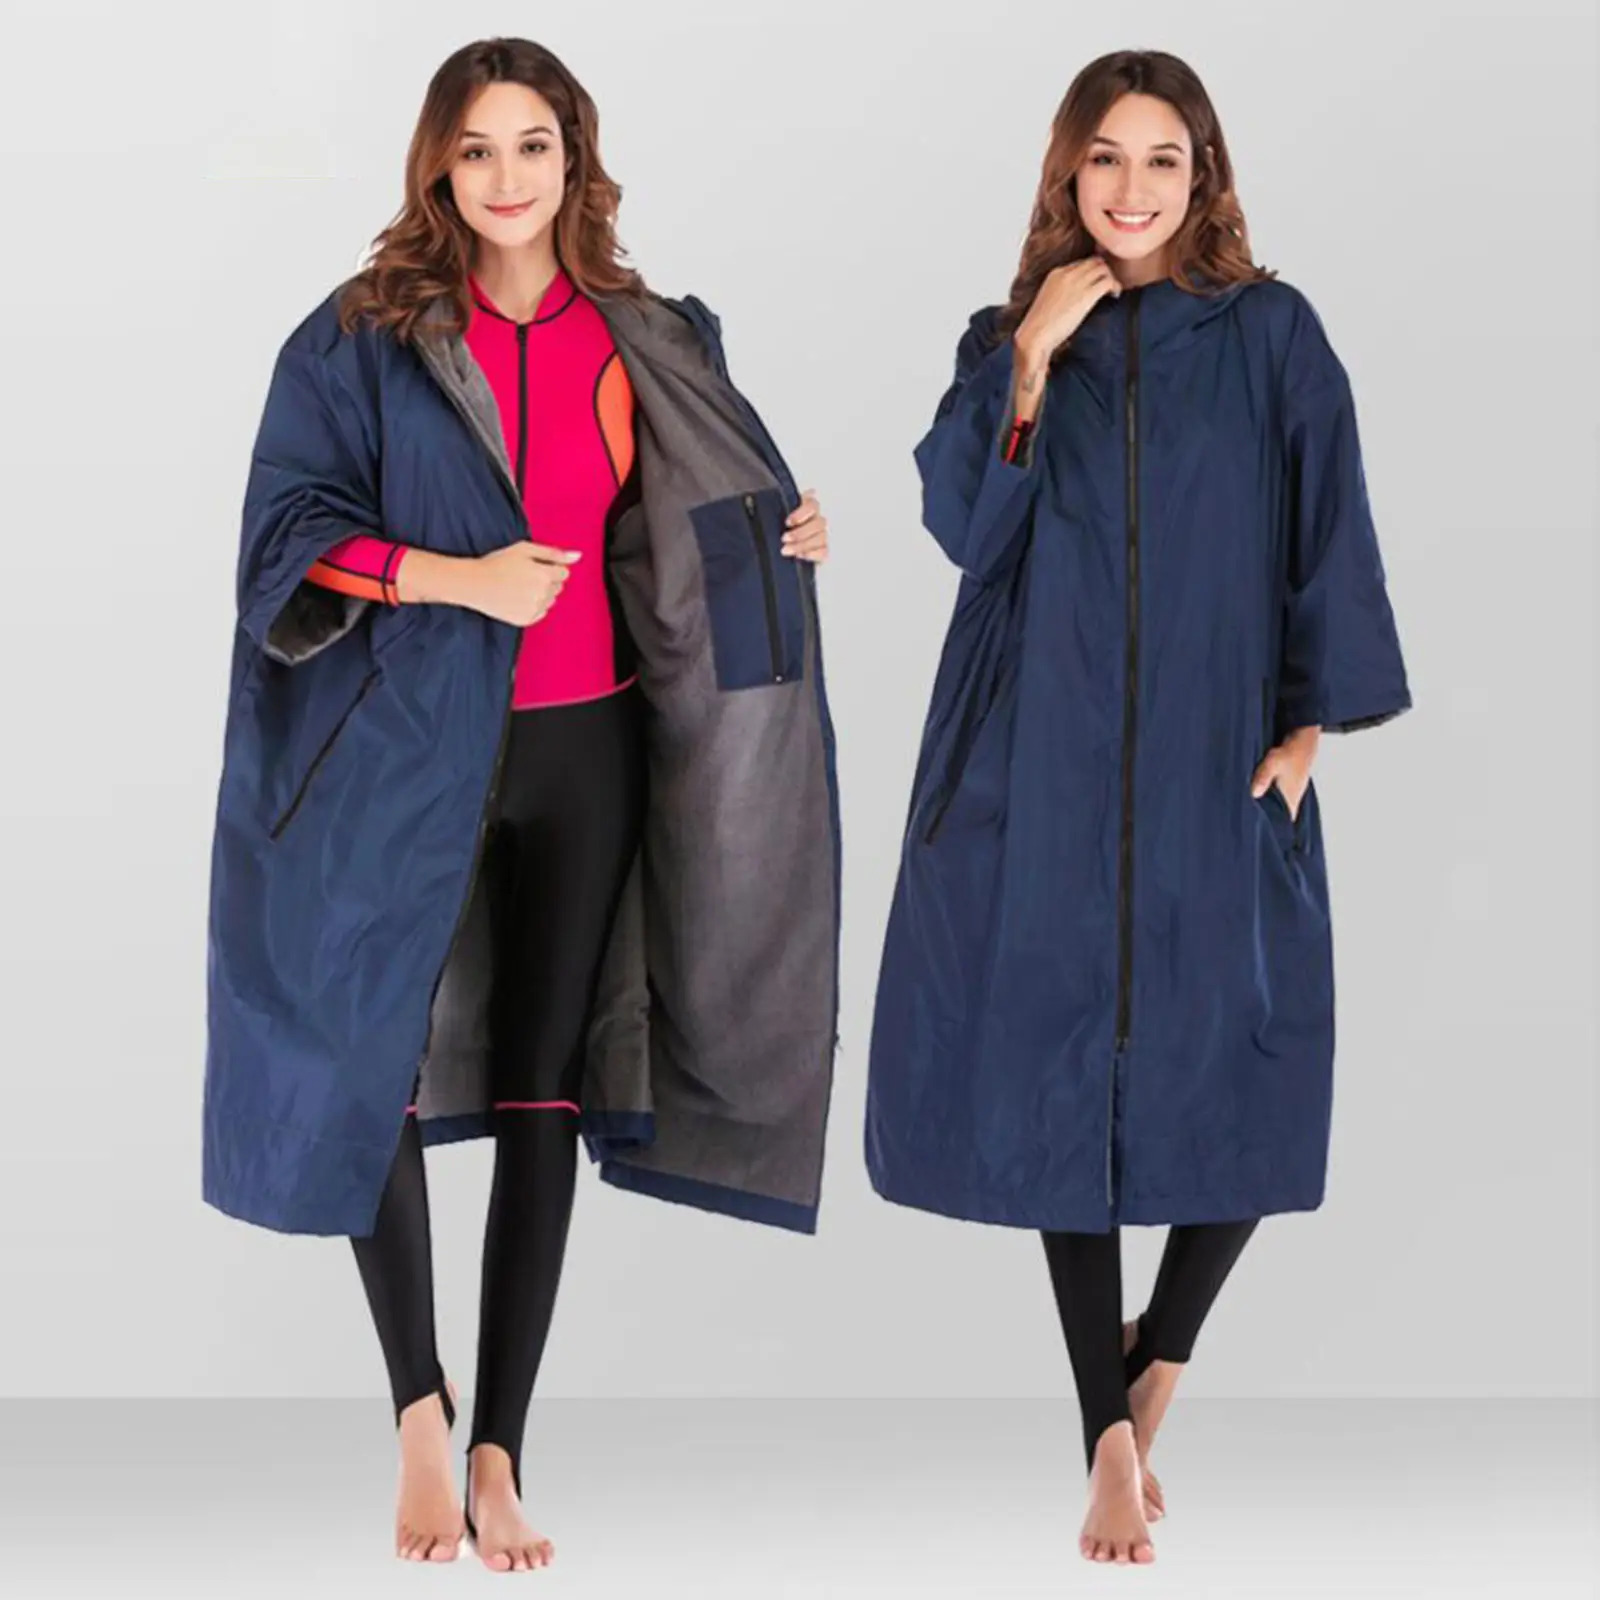 Women Men Surf Changing Robe Coat Jacket Thermal Warm Overcoat Rain Coat Poncho Cape Suit Outdoor Bathrobe Outwear Dry Robe